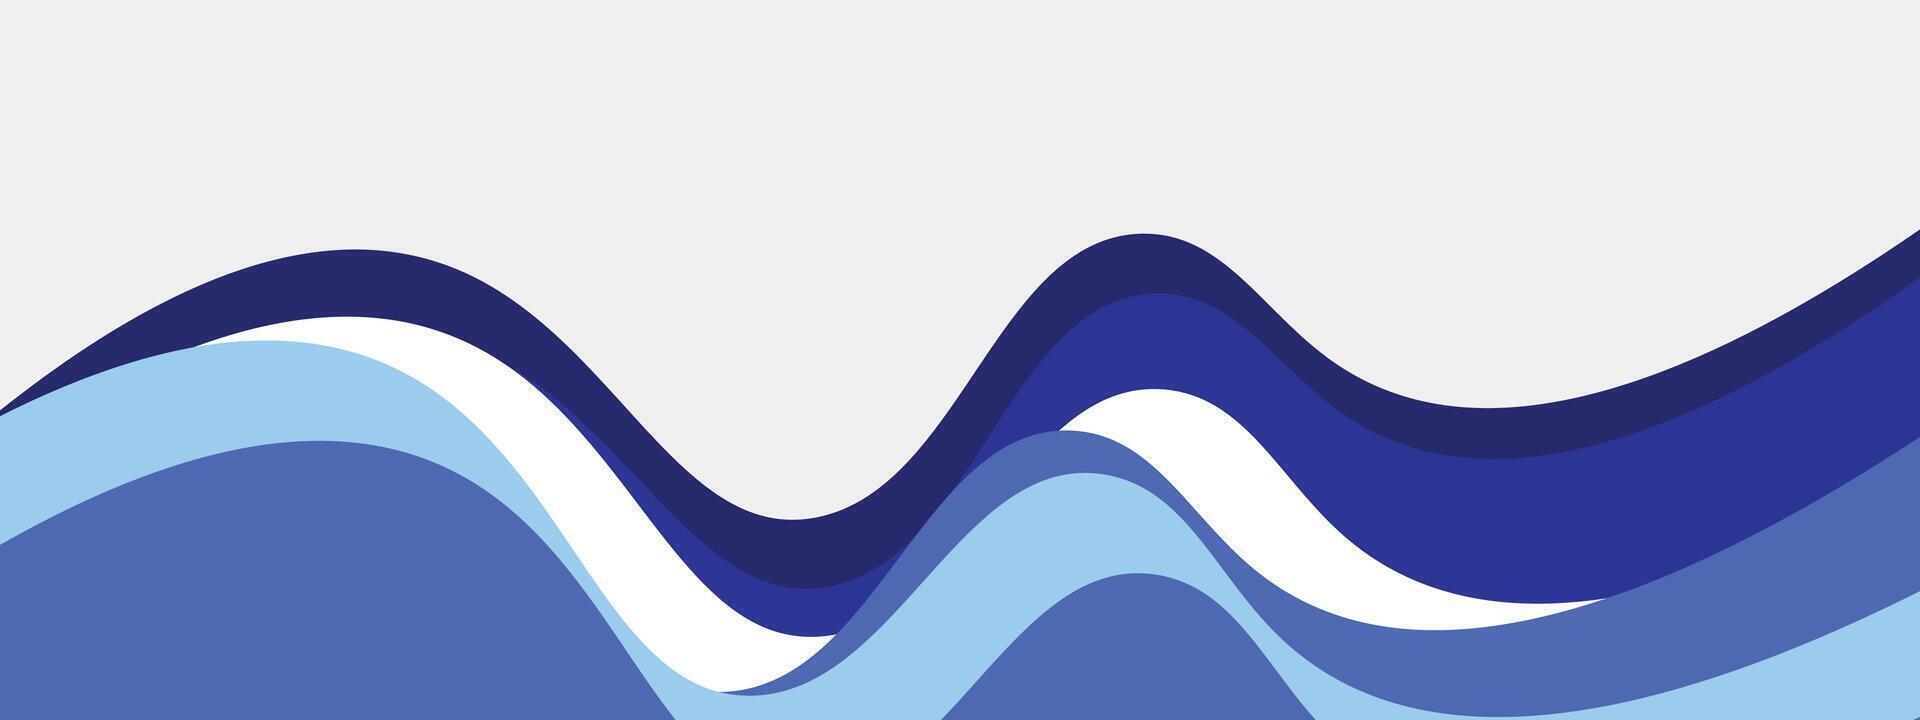 Abstract blue gradient banner template with dynamic background curve shapes. Modern sky blue business webinar horizontal banner design for web, backdrop, brochure, website, landing page, presentation vector